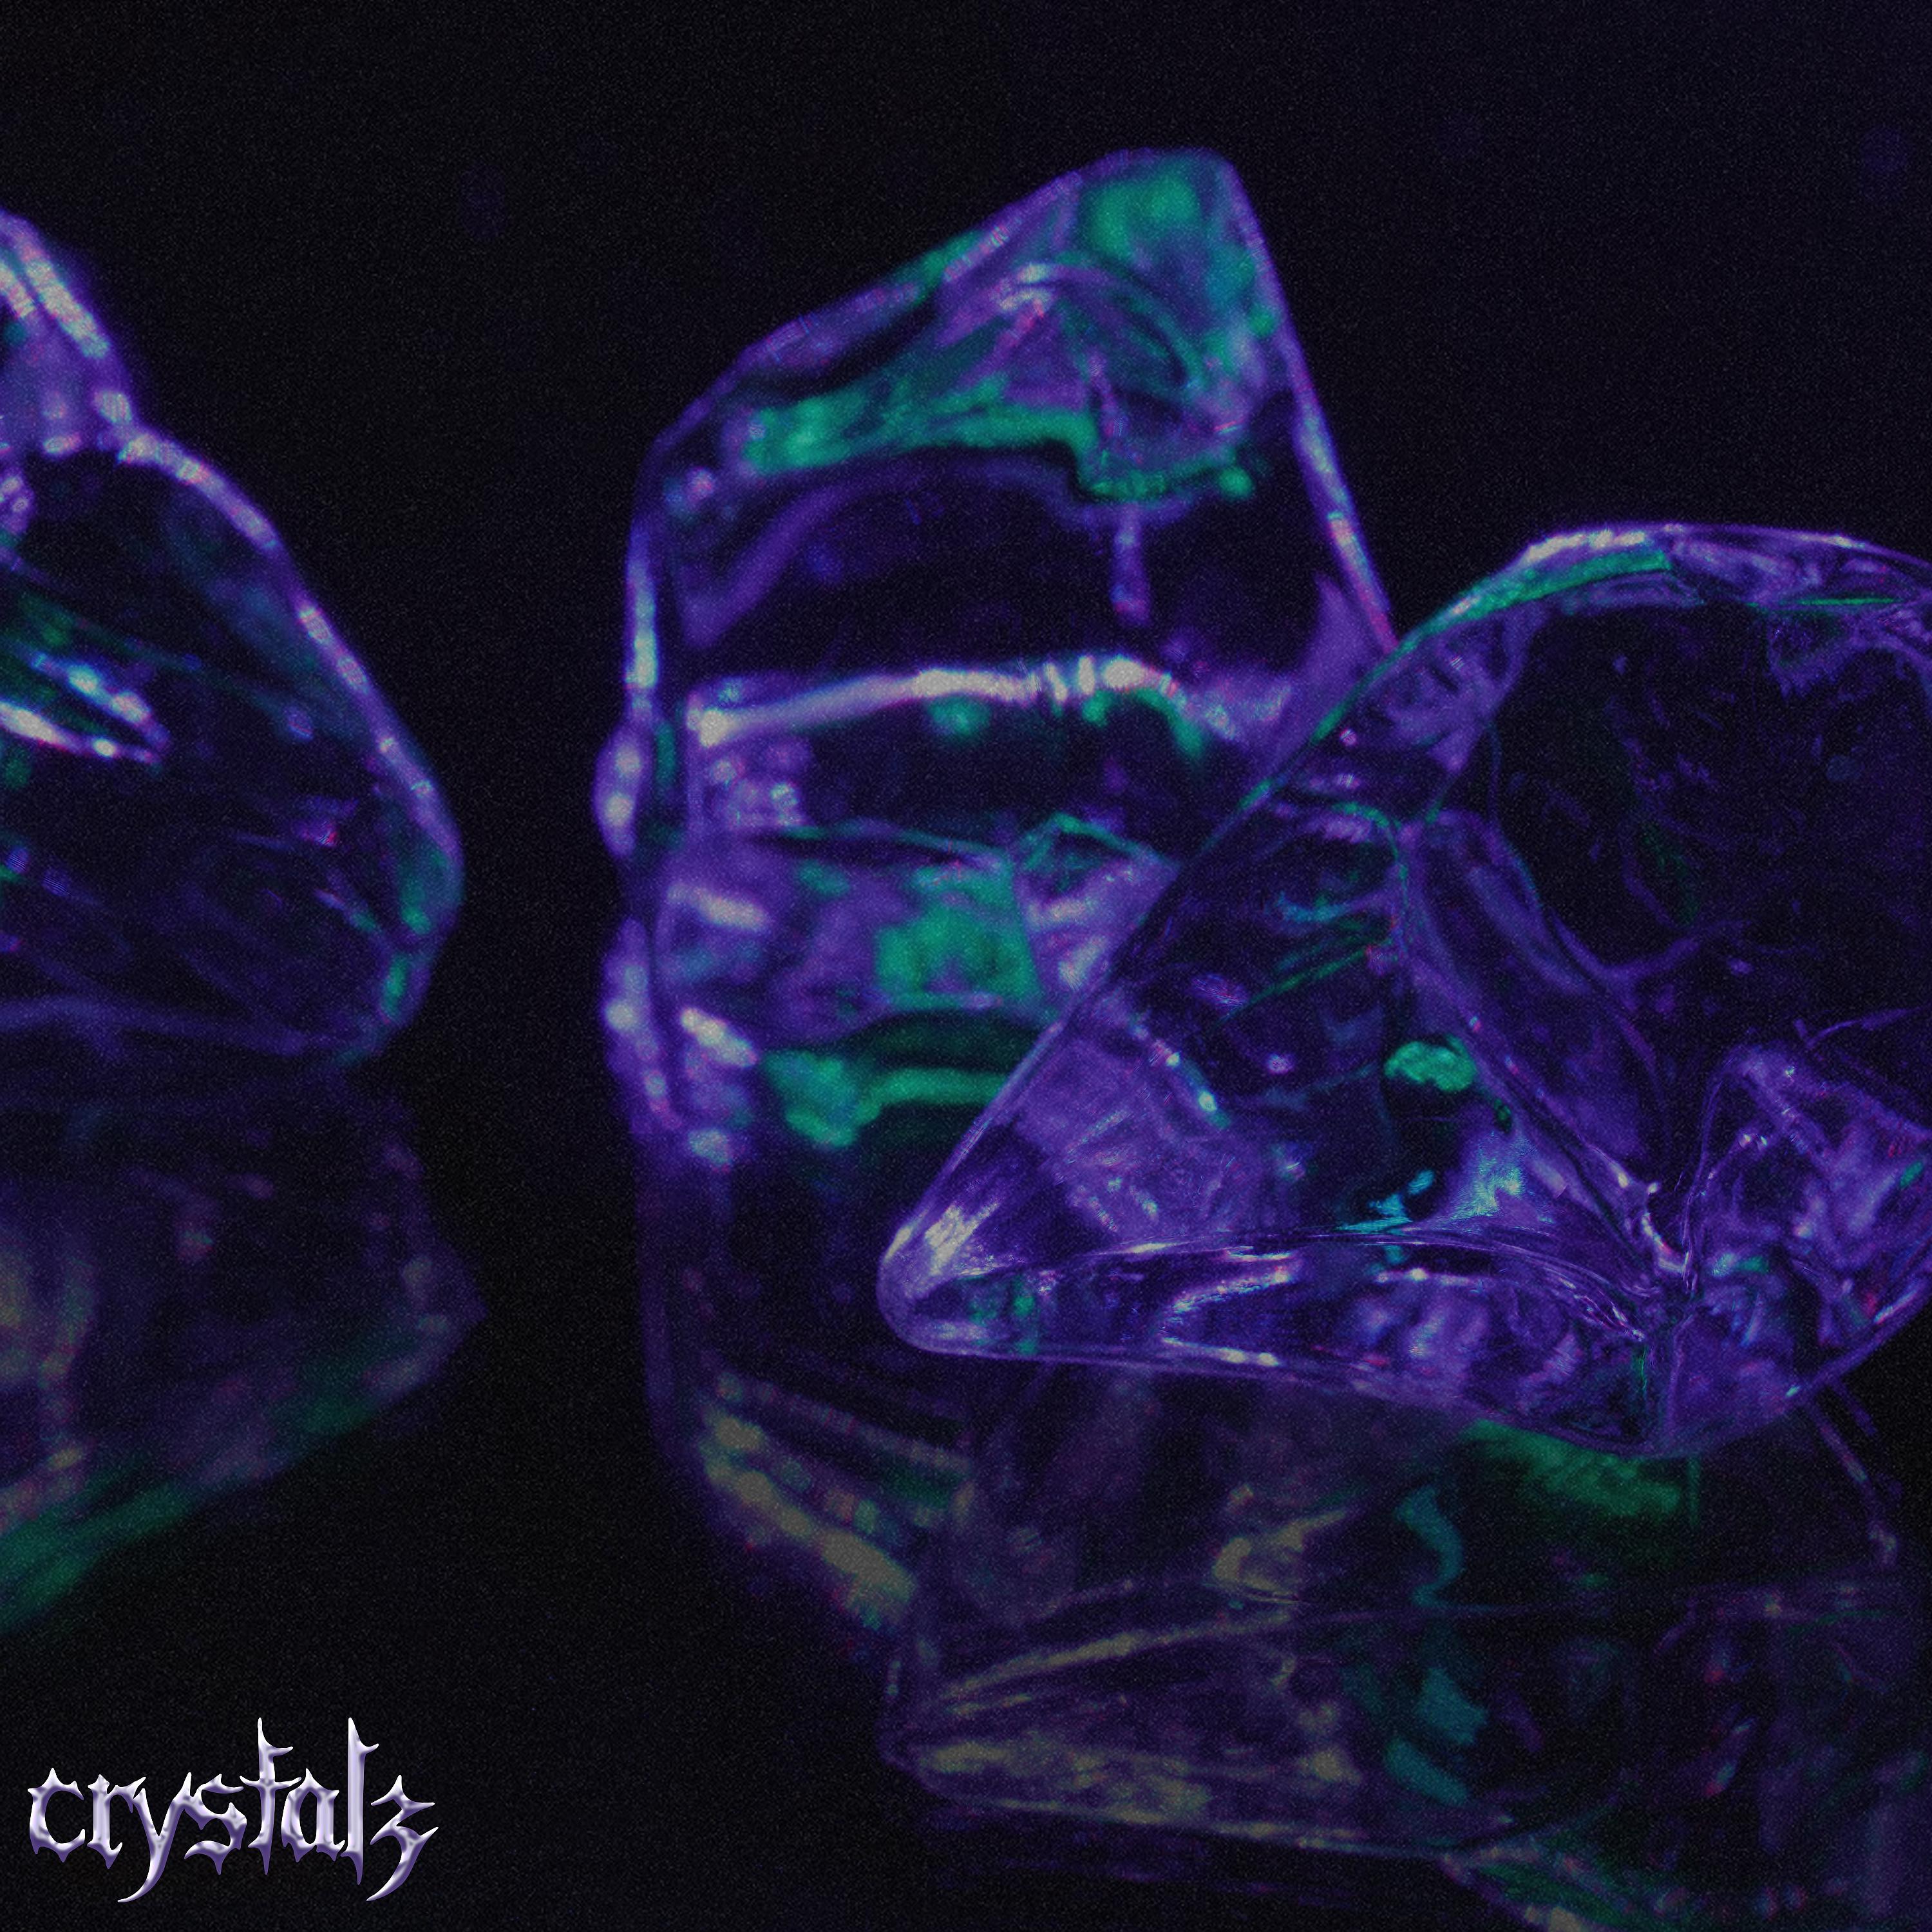 Crystals lsolate. Crystals isolate.exe. Crystals Song isolate exe. Isolate exe Crystals обложка. Кристалс словед.